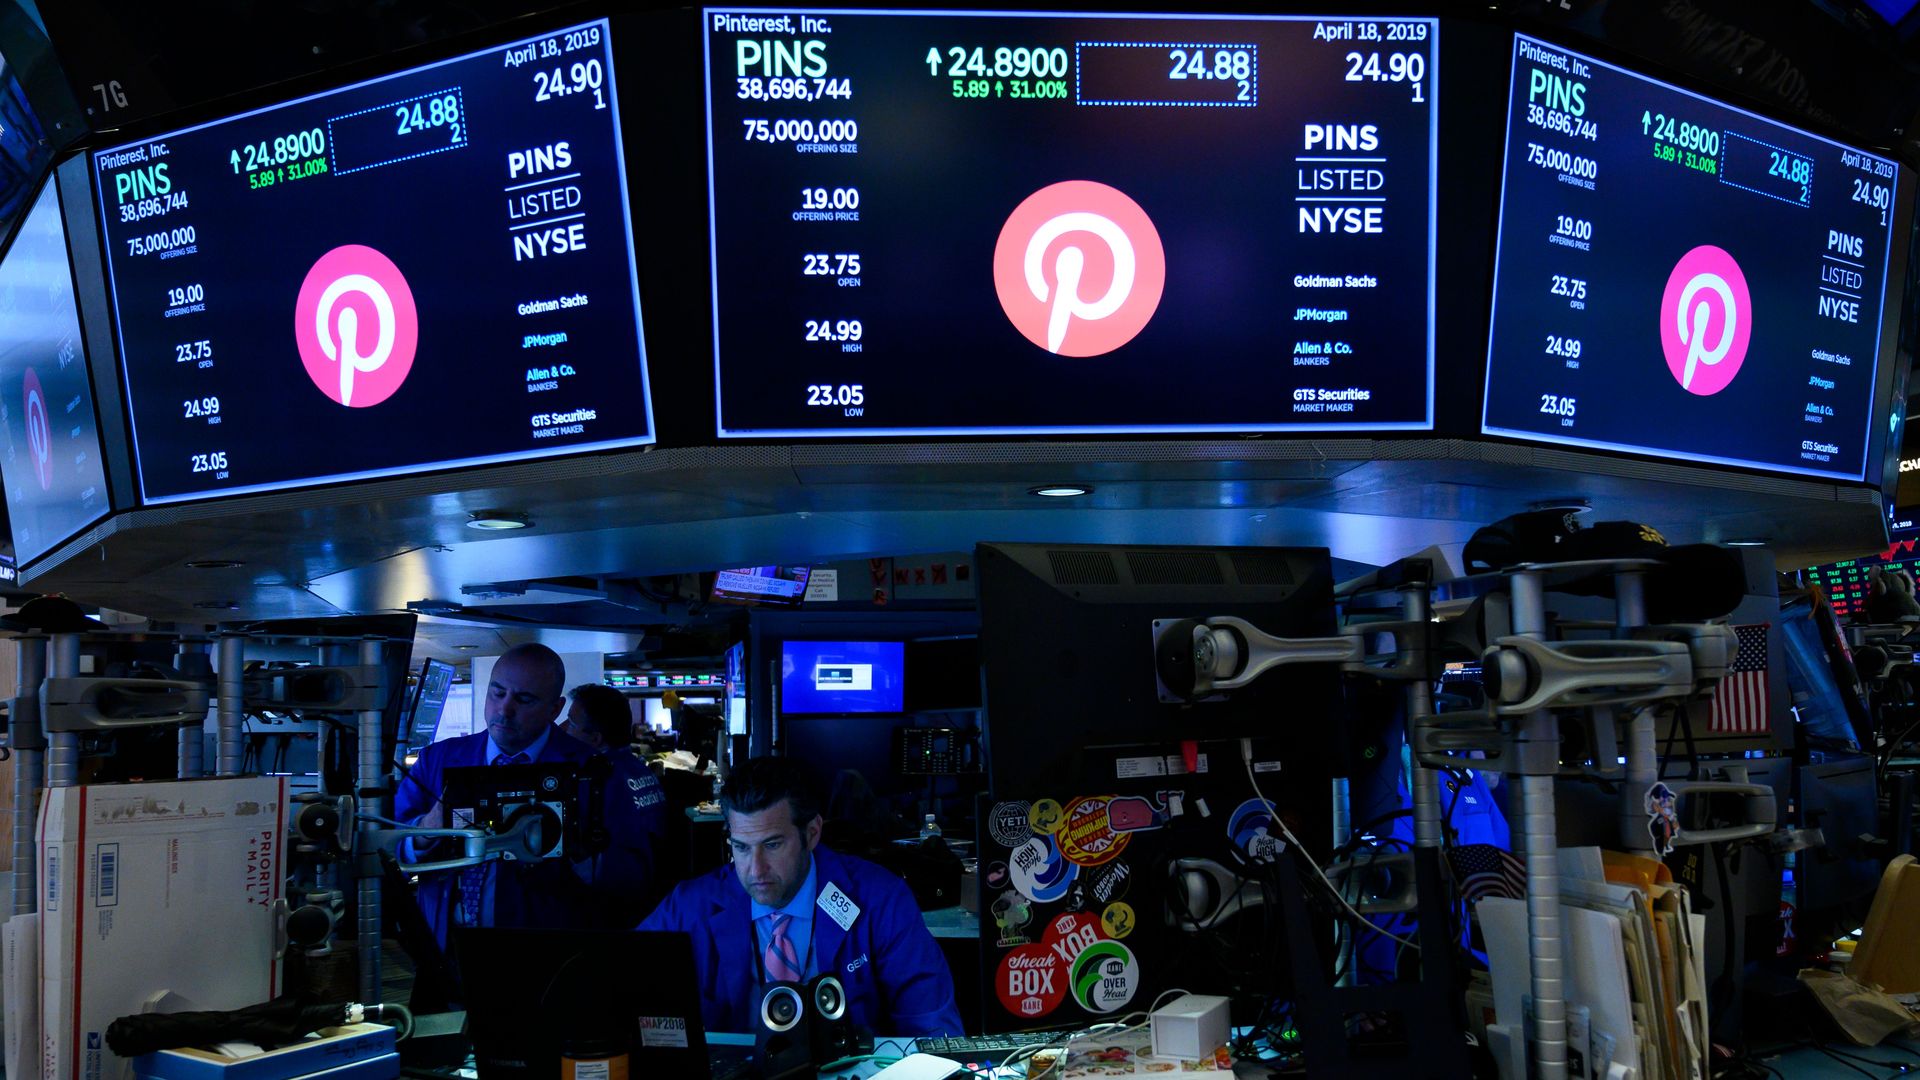 Photo of NYSE stock exchange during Pinterest IPO.